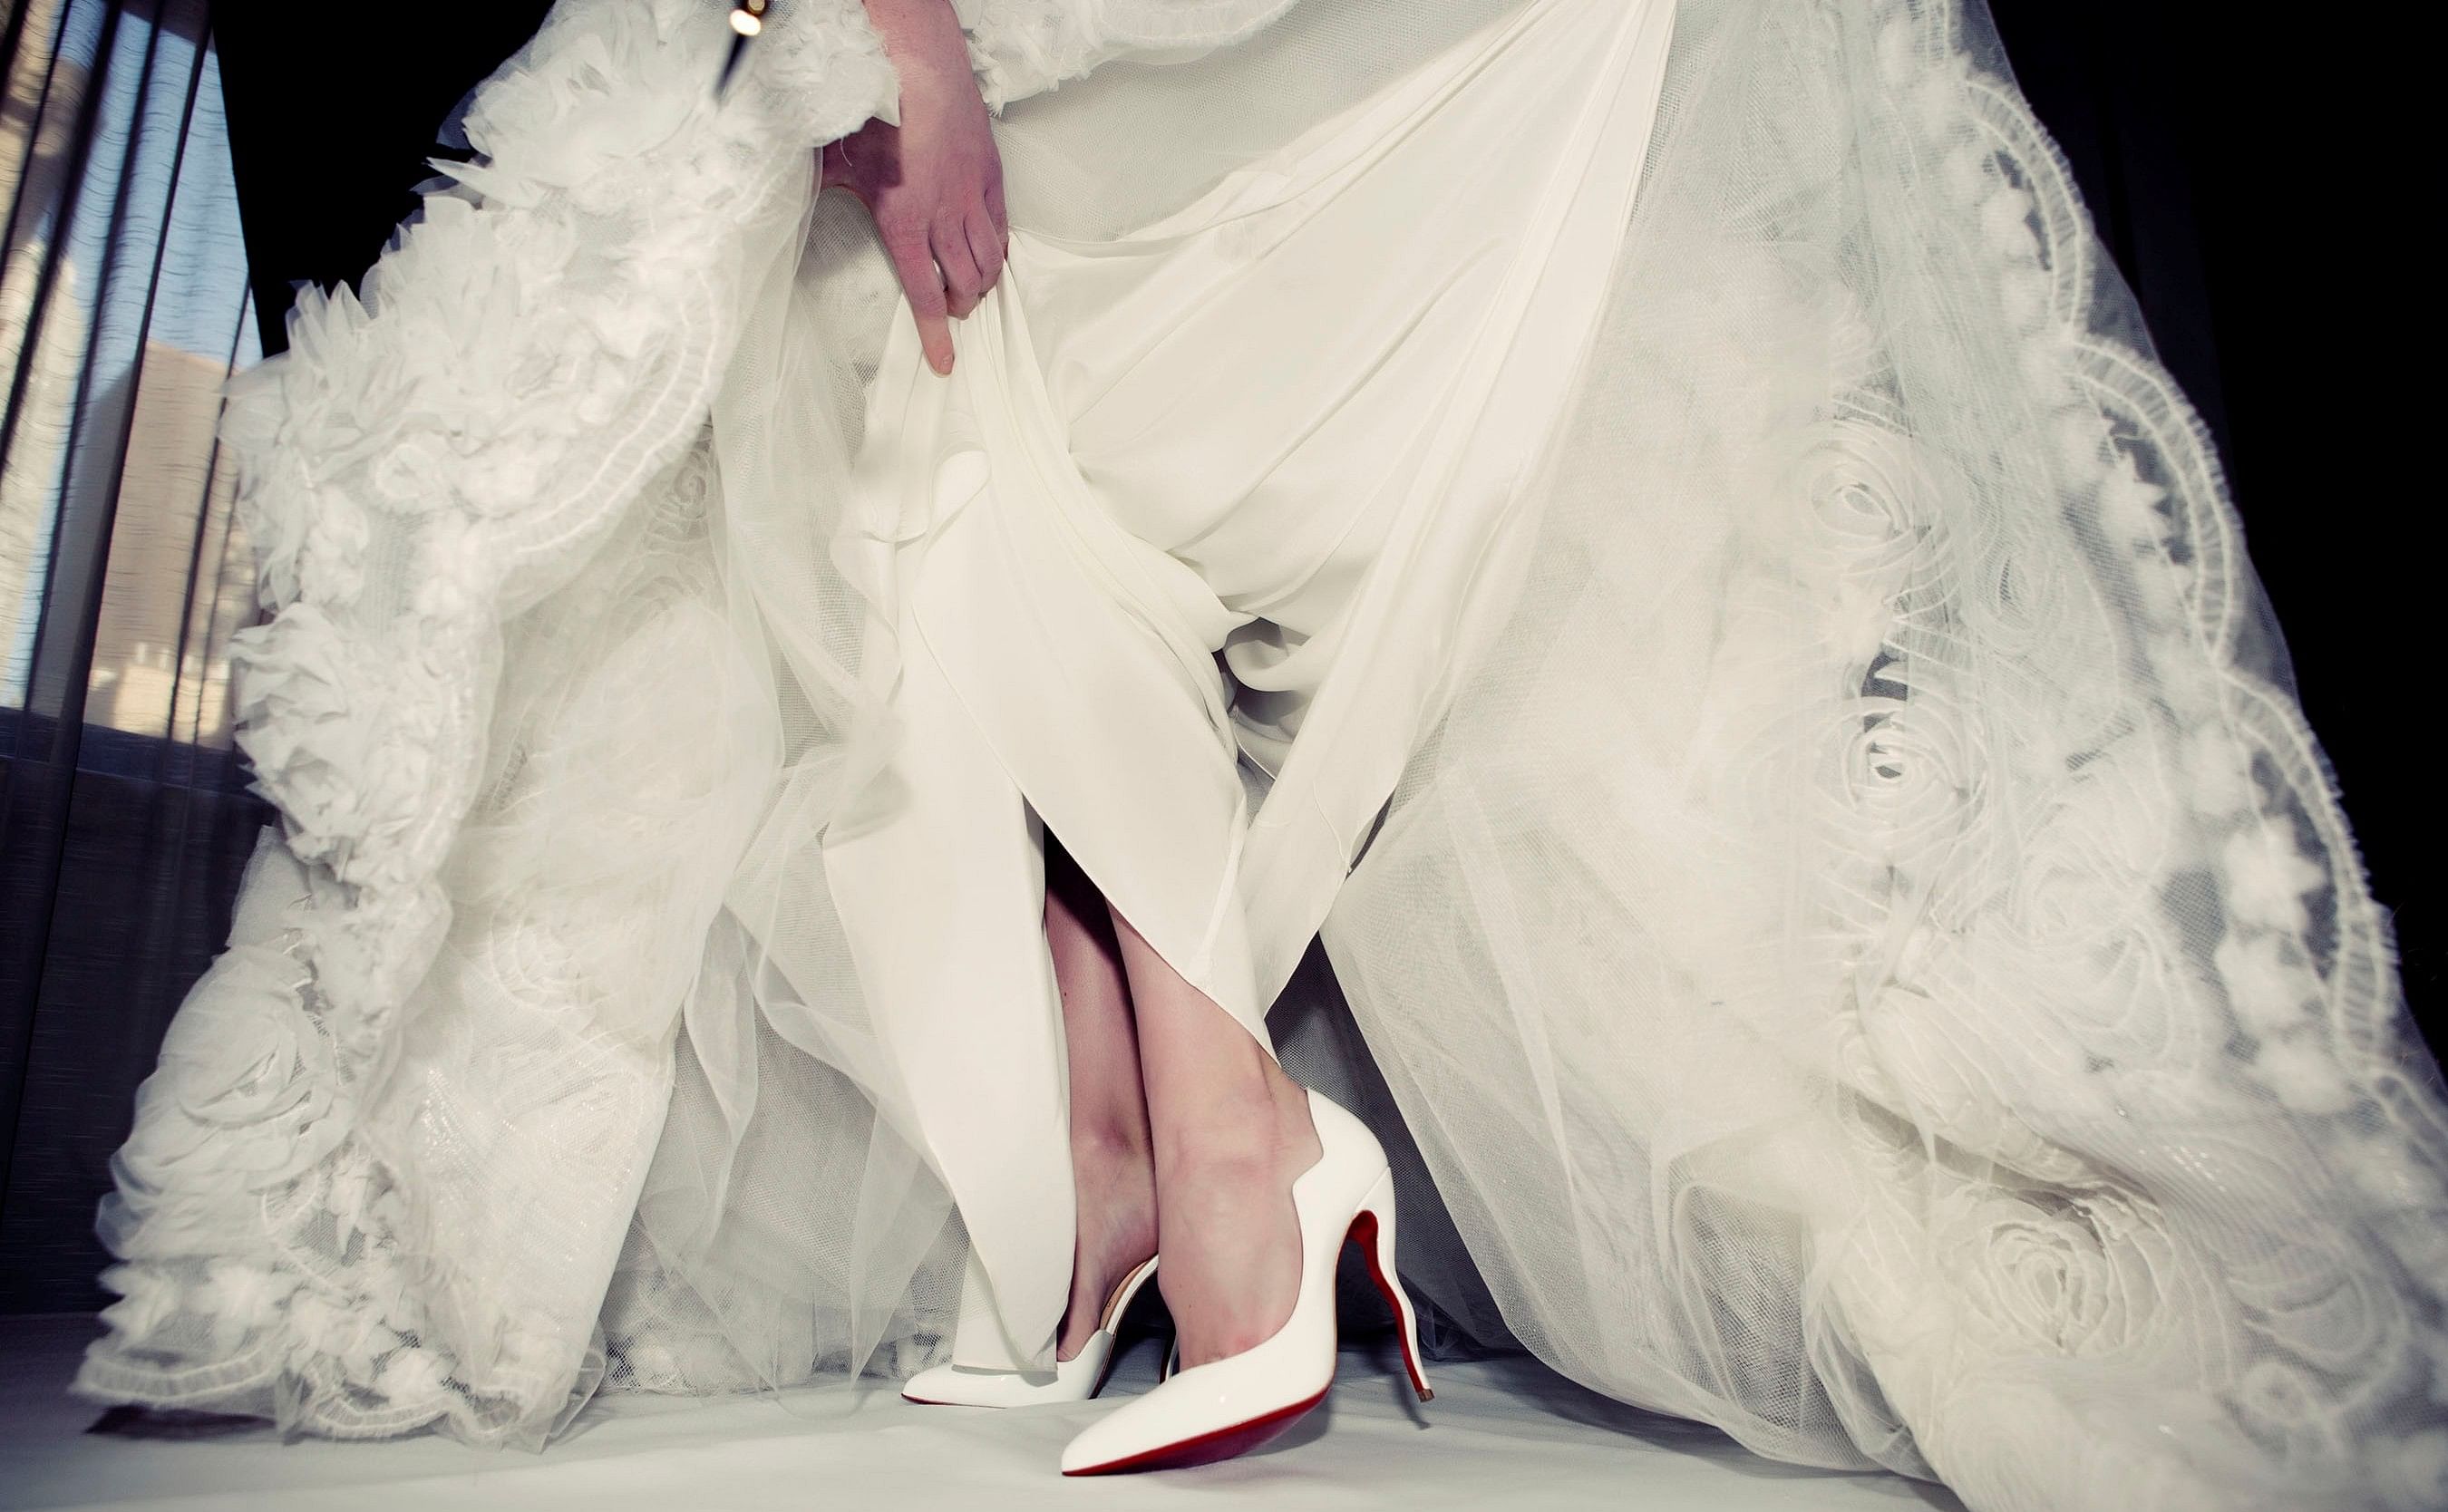 Christian Louboutin Heels at Bridal Fashion Week - Female